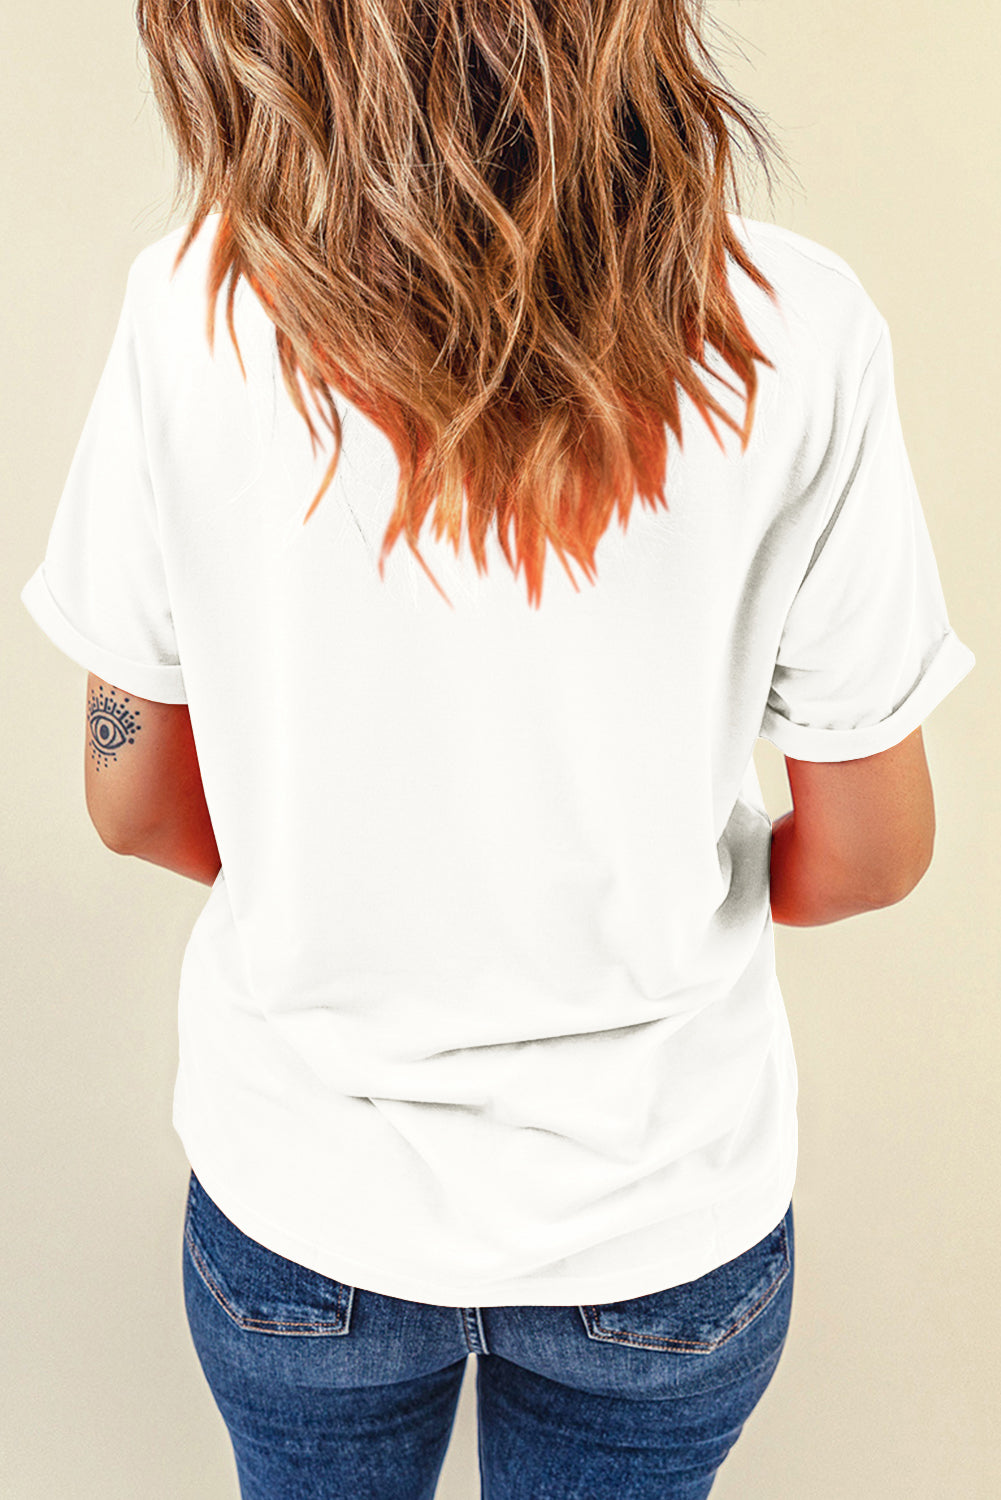 White MOM Flower Heart Shaped Print Crewneck T Shirt Graphic Tees JT's Designer Fashion